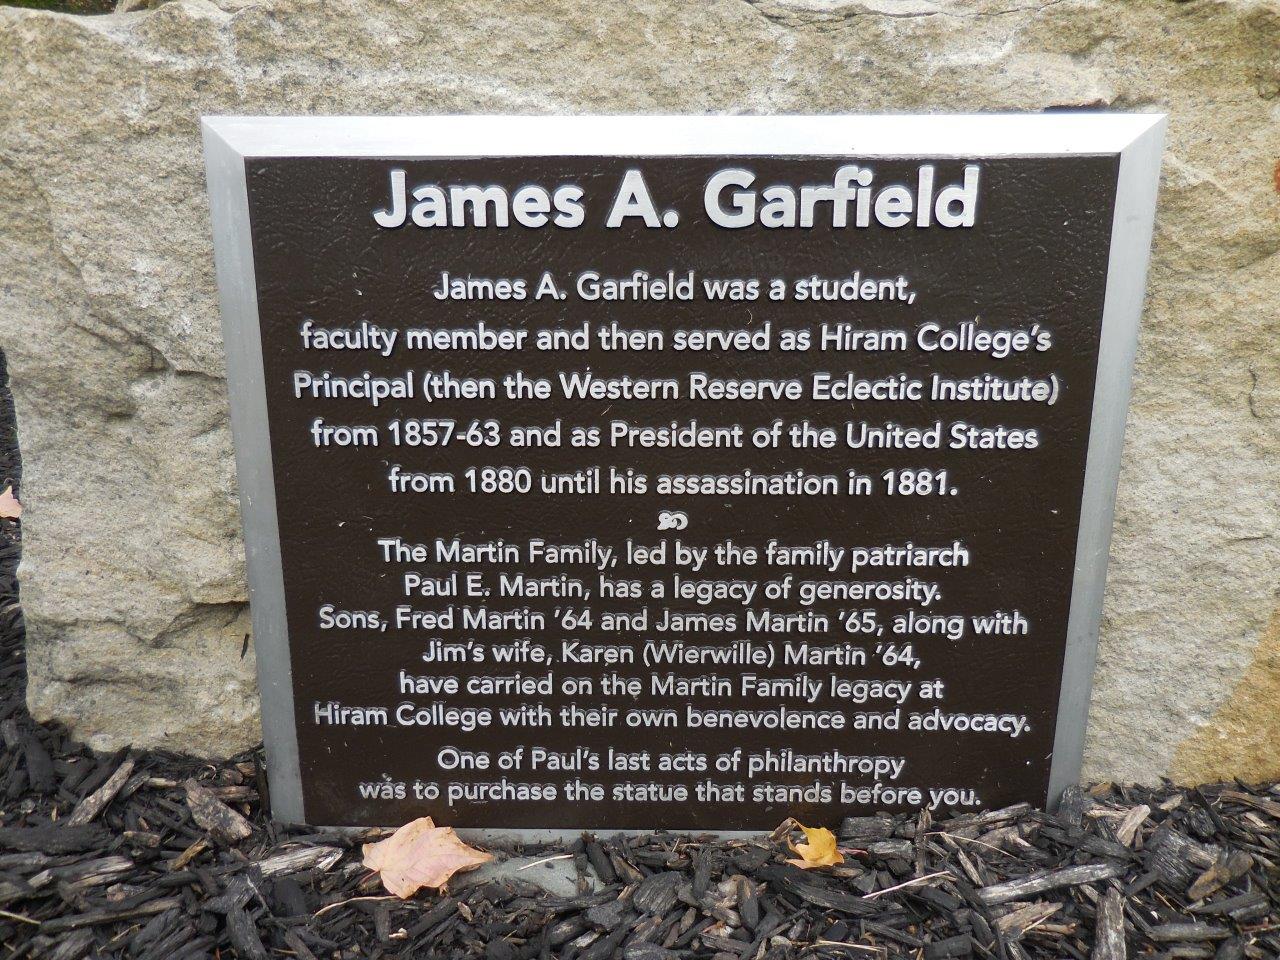 James Garfield statue at Hiram College